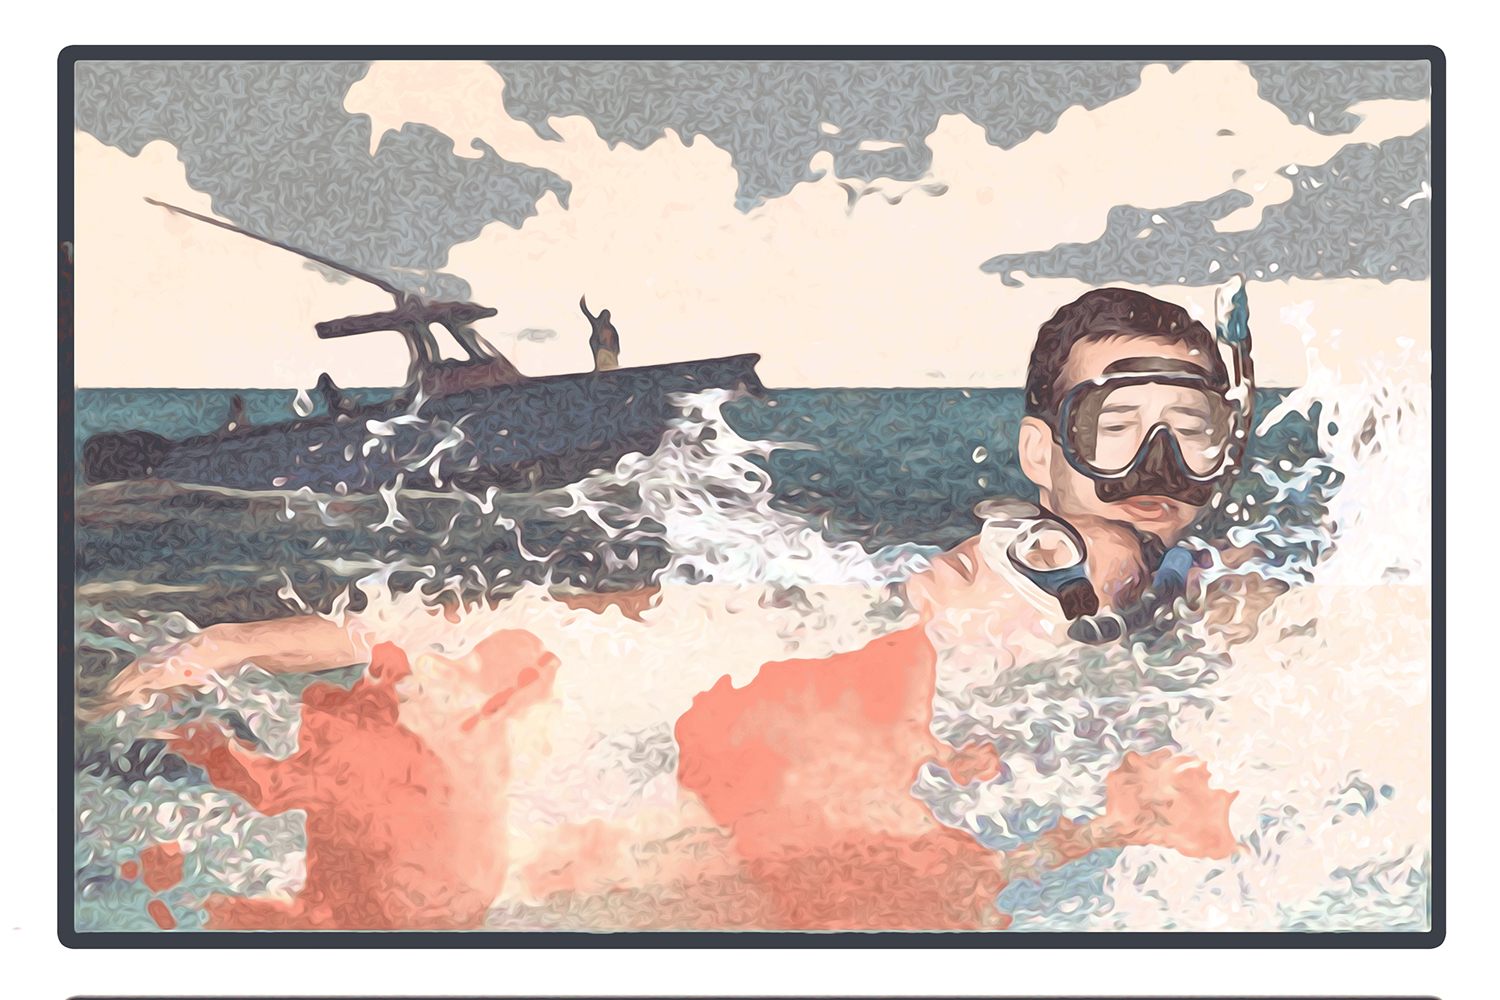 man rescue-swims girl illustration